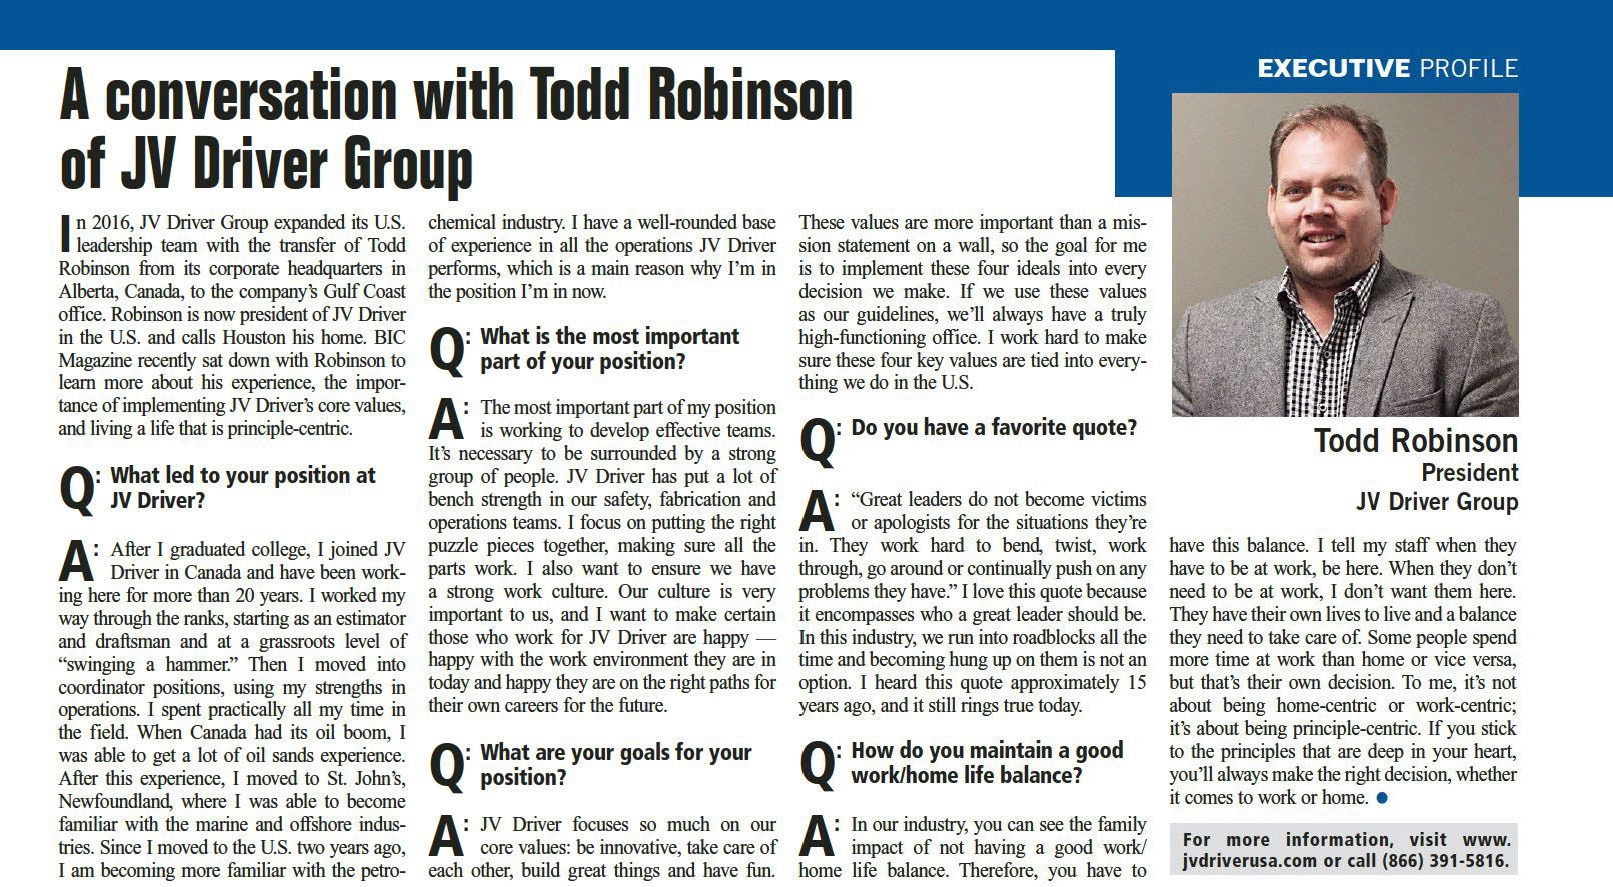 Meet Todd Robinson